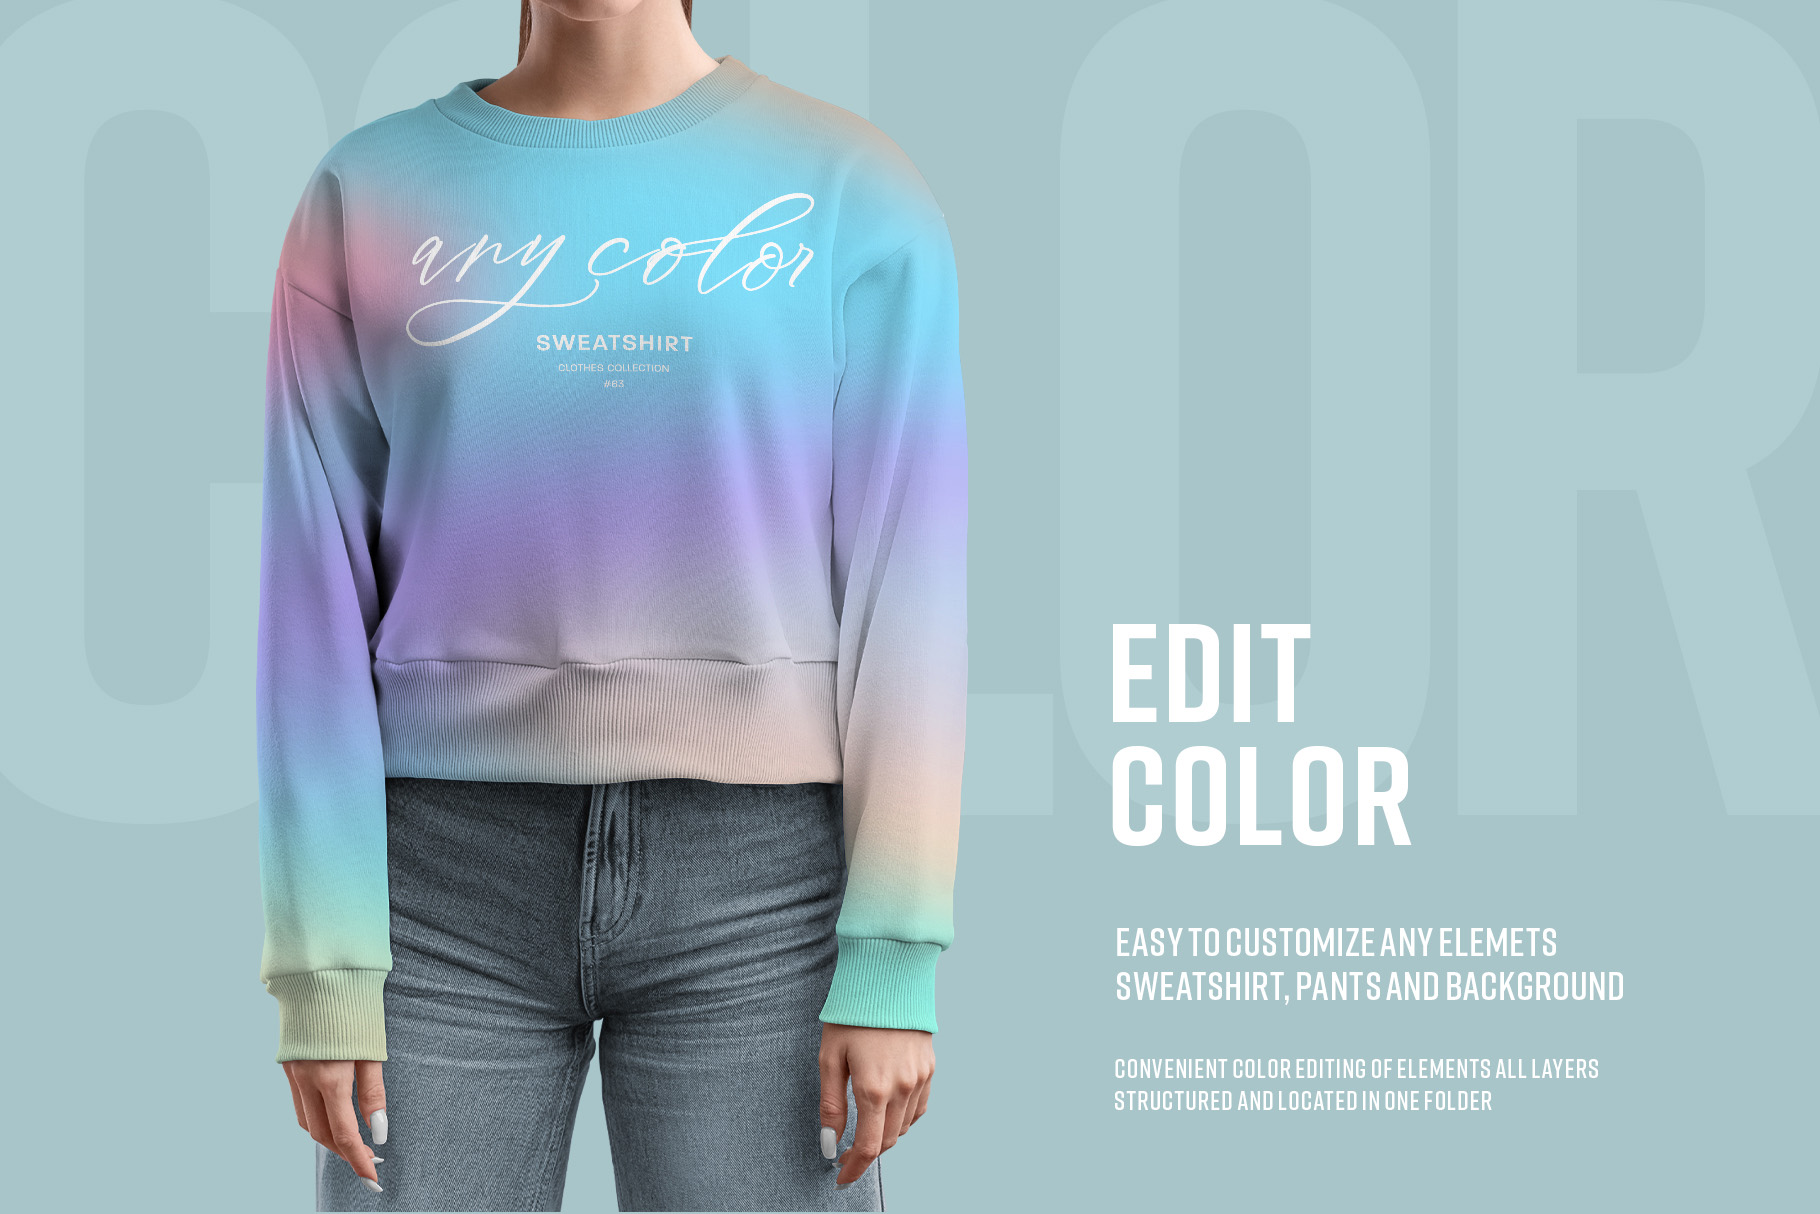 9 Mockups Woman Crop Top Sweatshirt edit color.